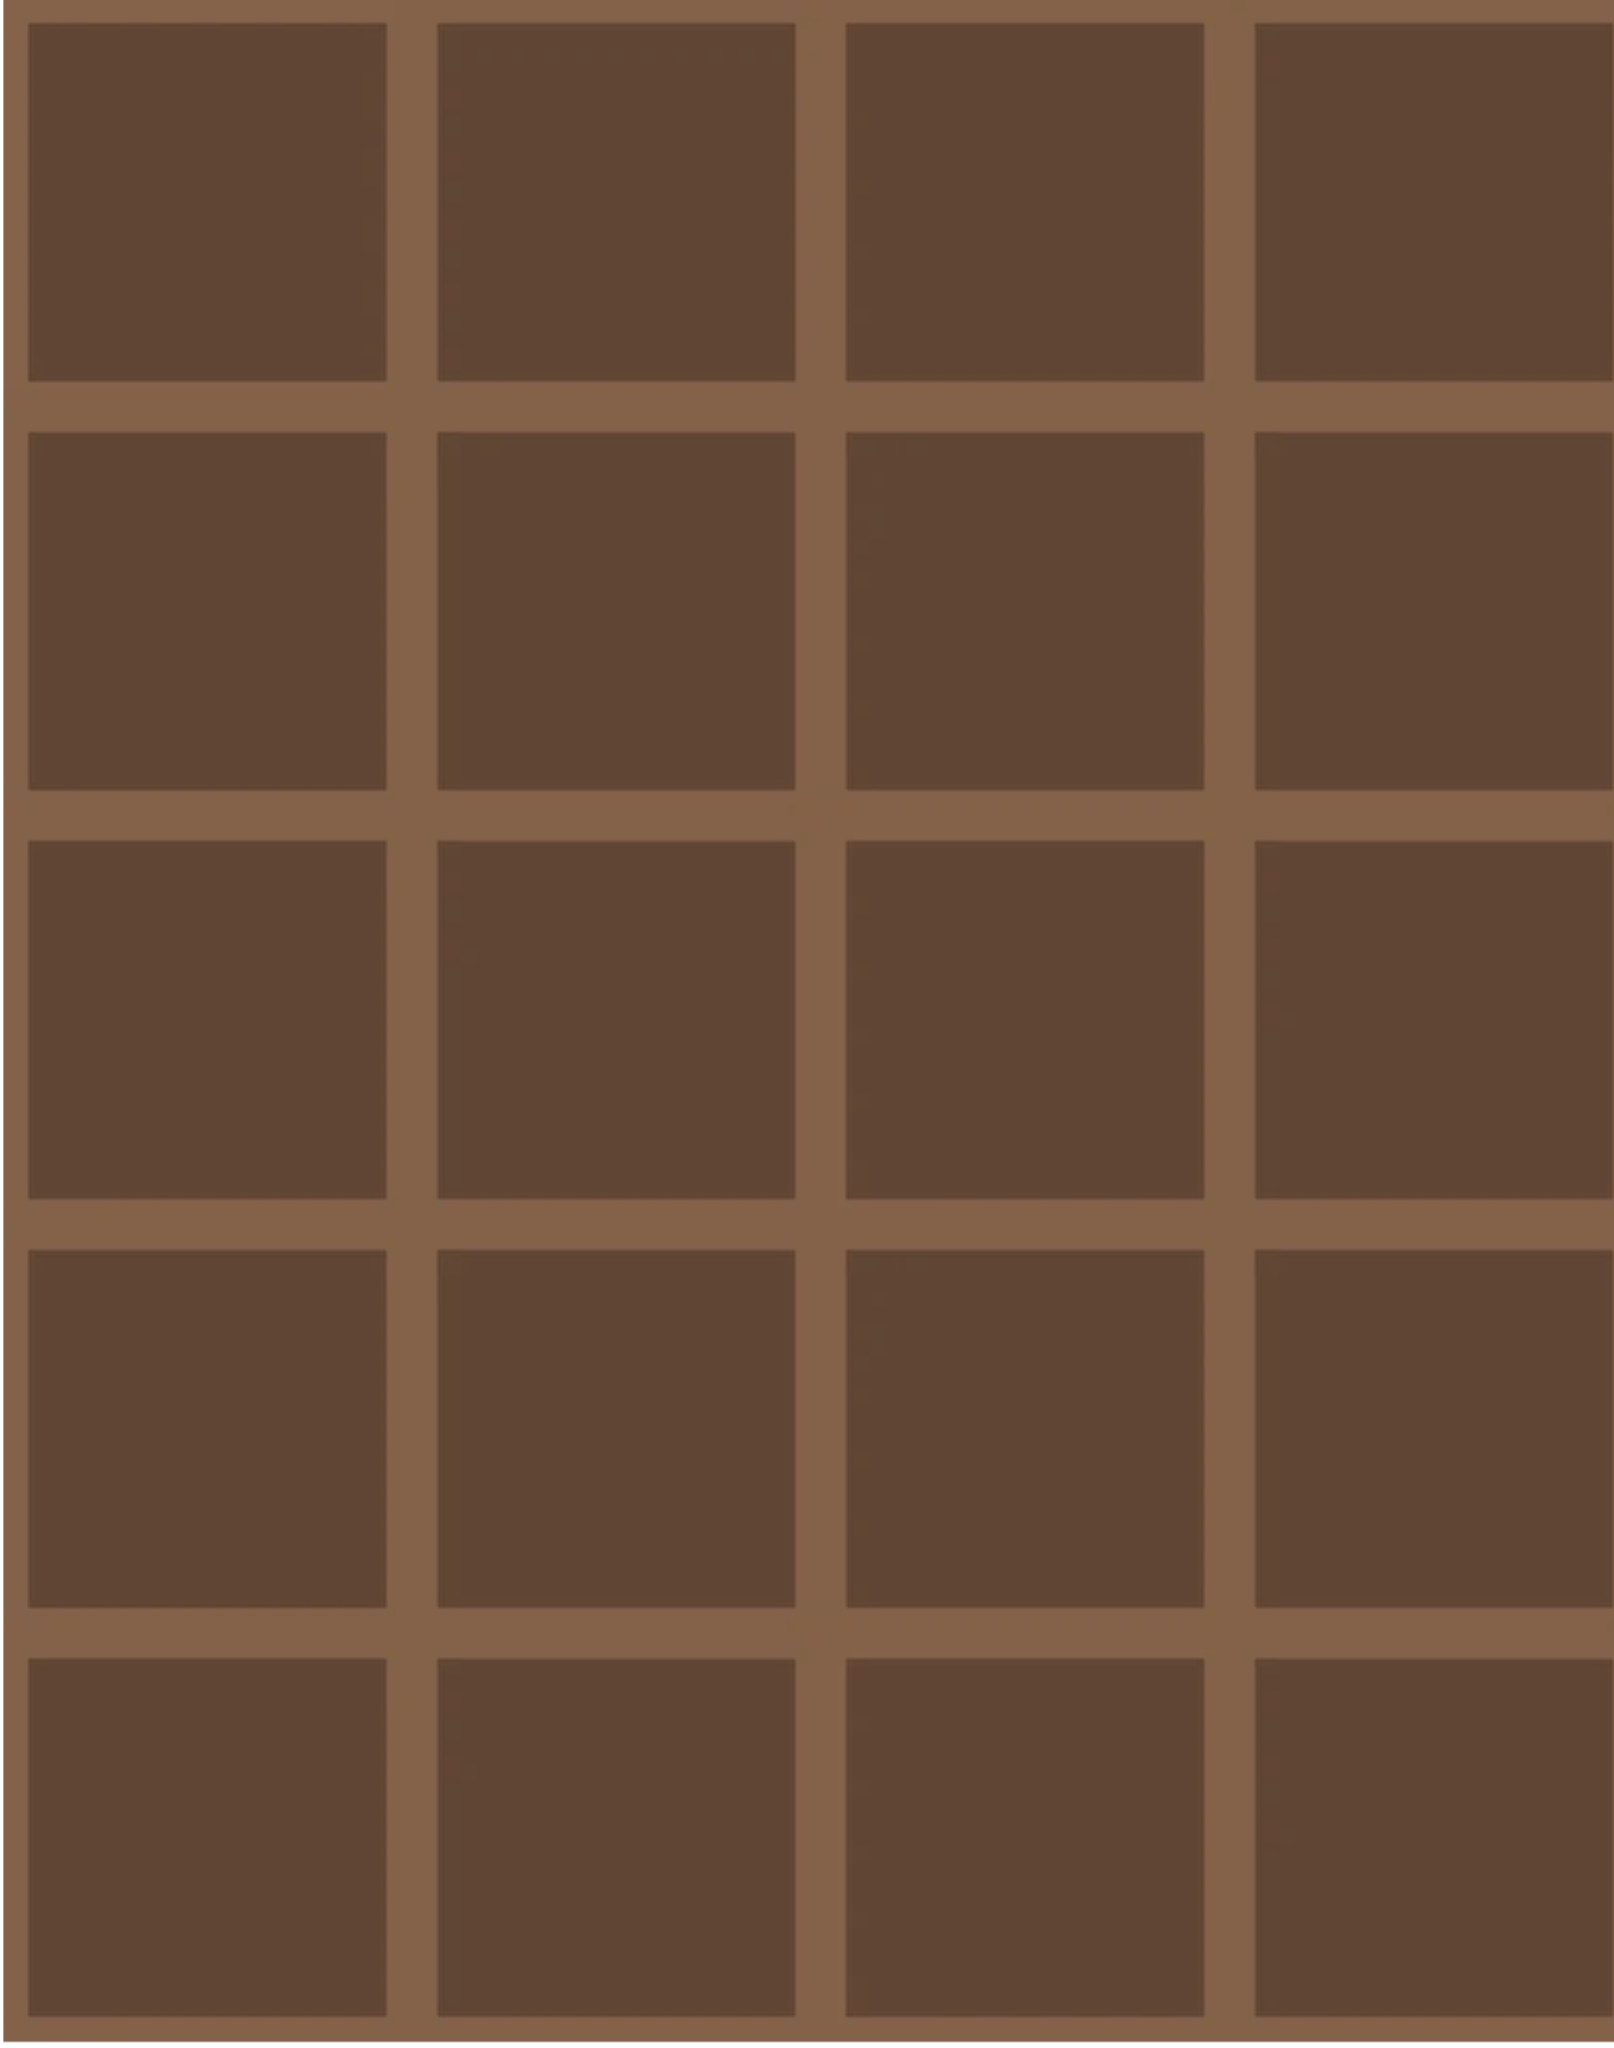 Grid Bold, Line: Light Brown. Background: Brown